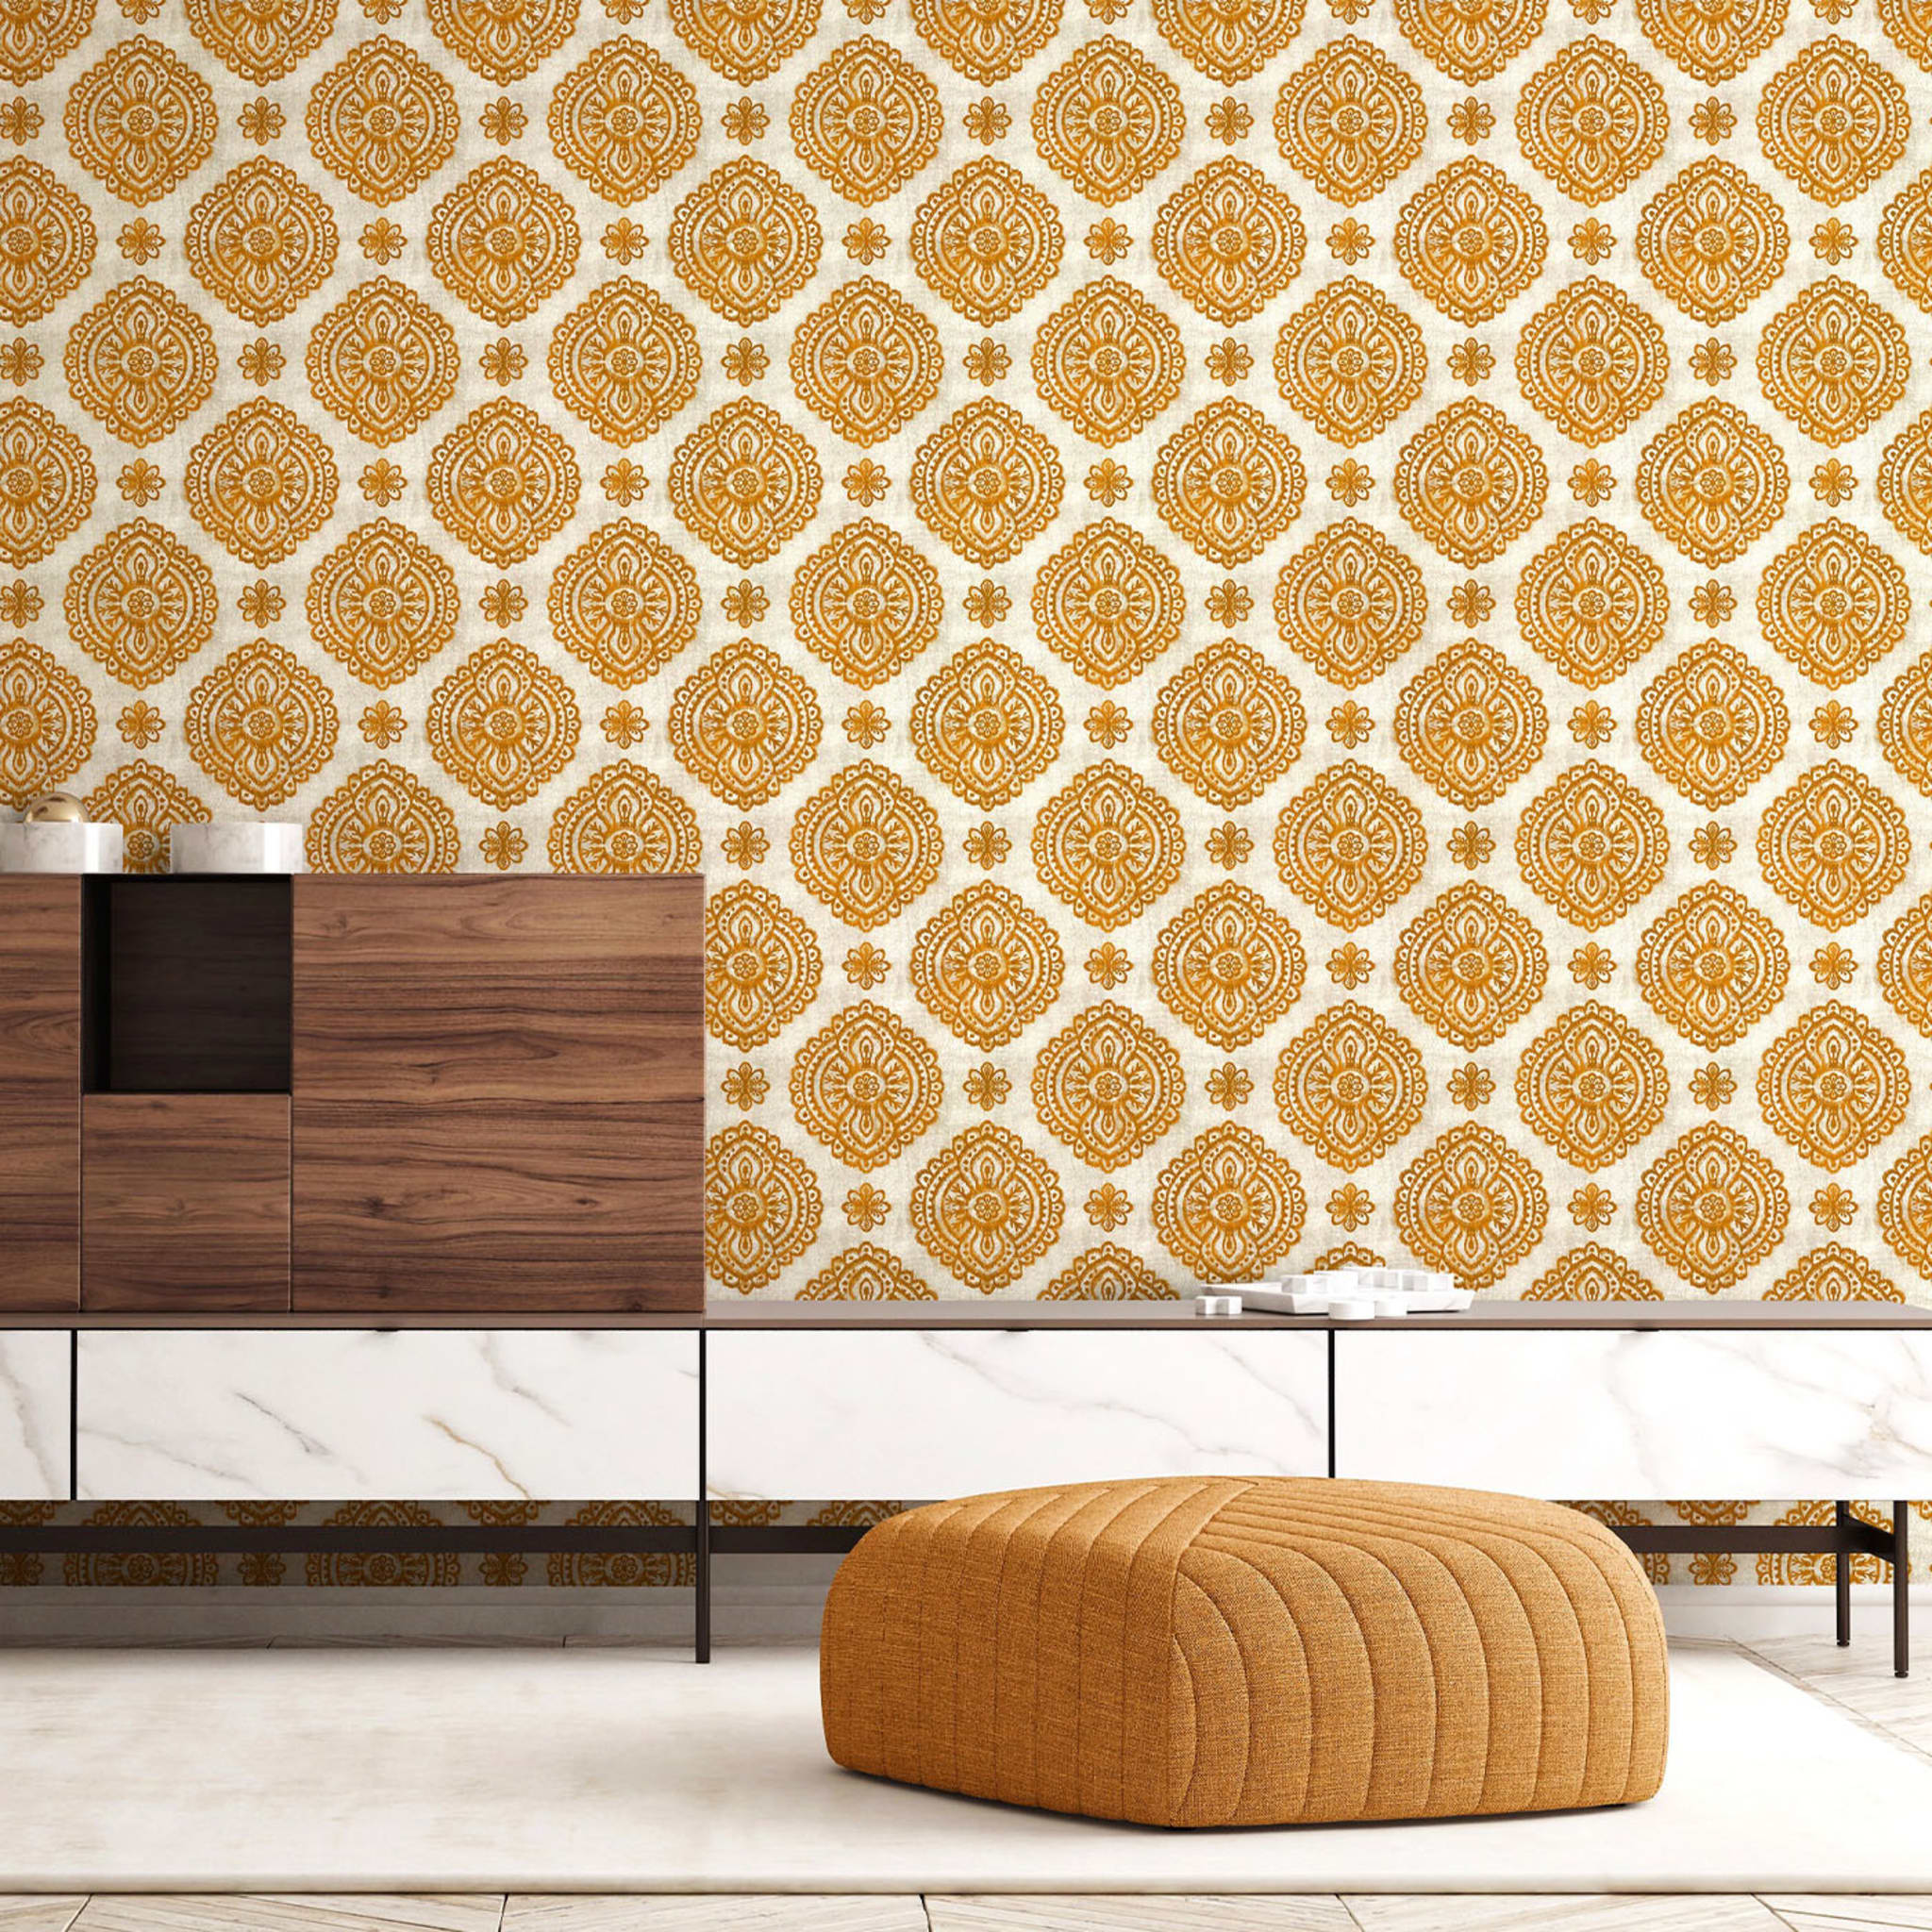 Pacri Orange Wallpaper - Alternative view 1